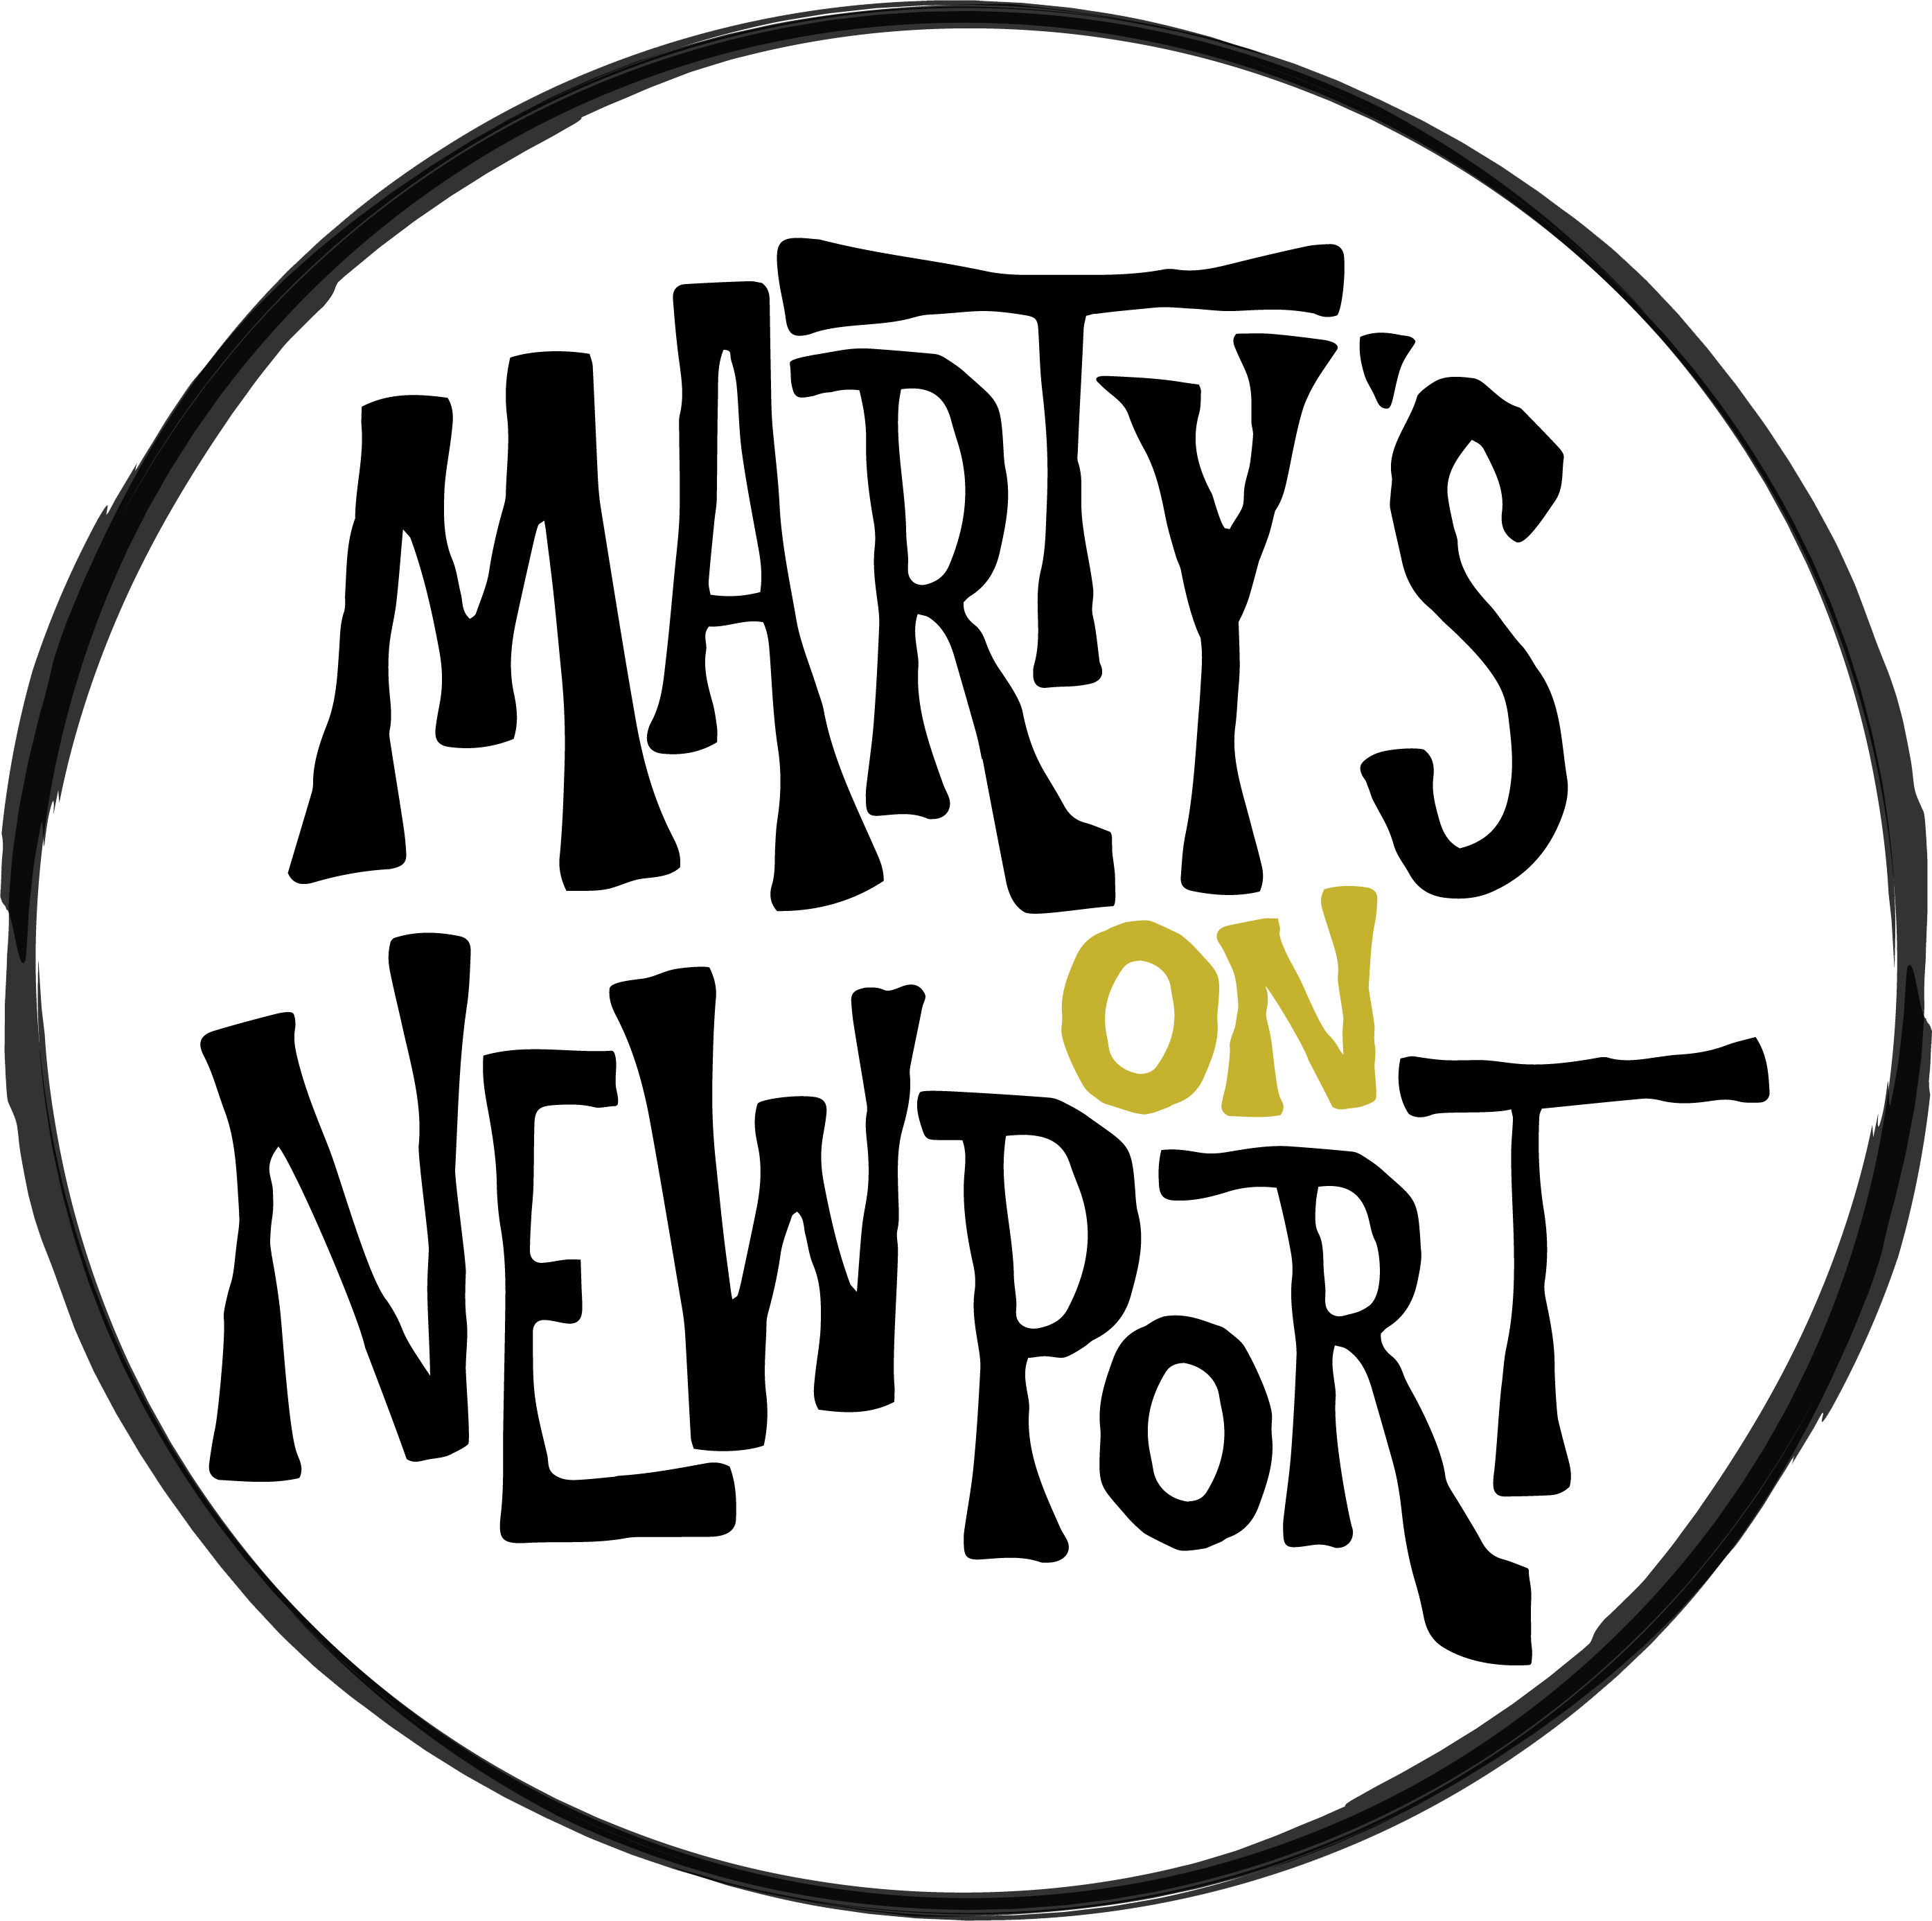 Newport лого. Newport logo. Марти надпись. Newport logo PNG. 2789